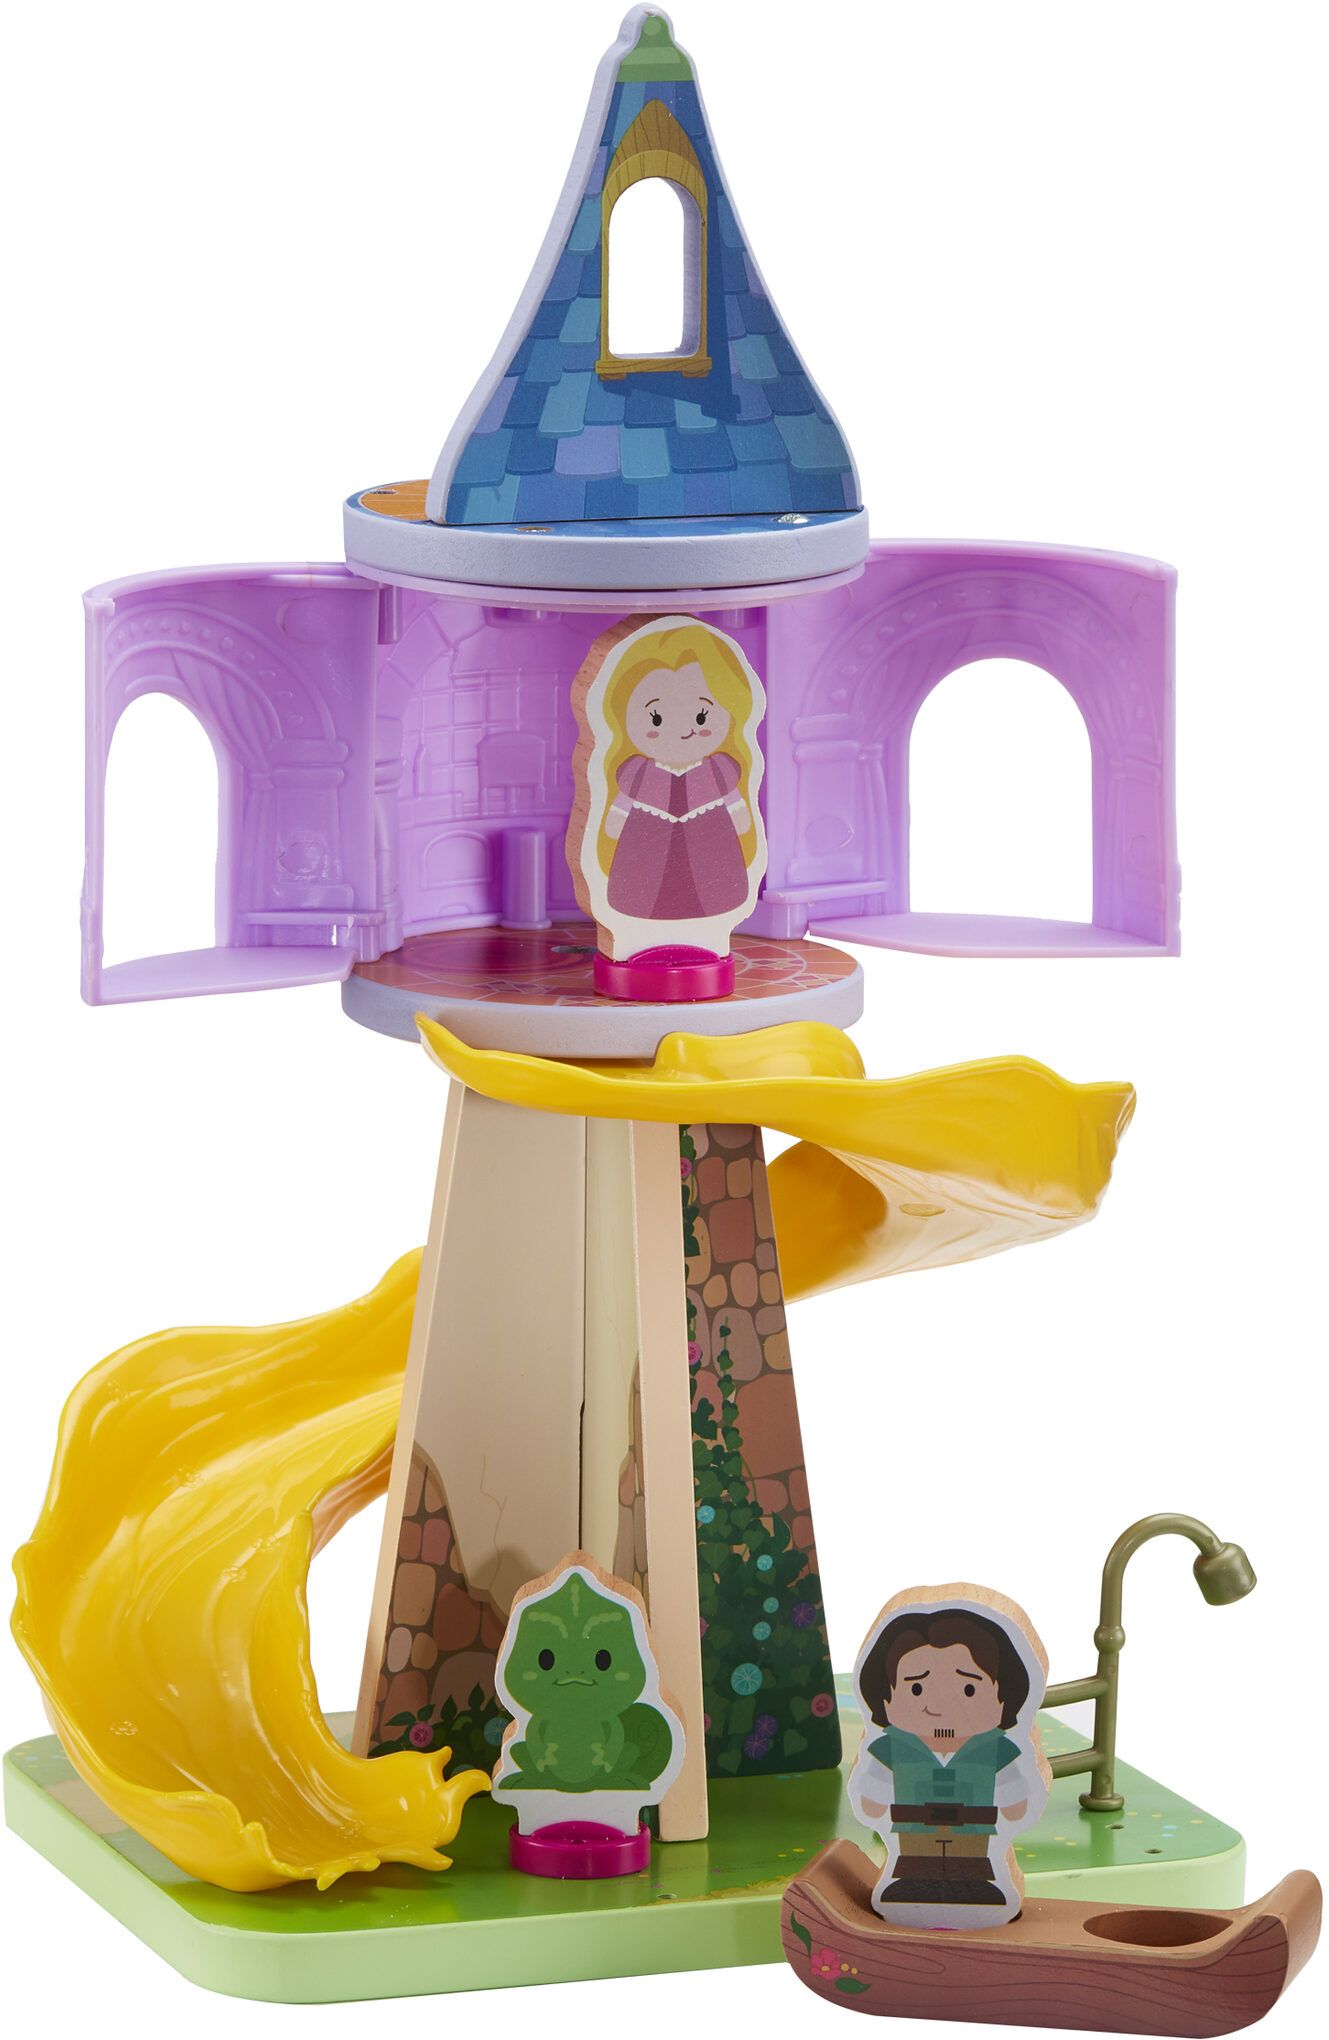 disney wooden toys tower set - rapunzel disney figure set - rapunzel's tower